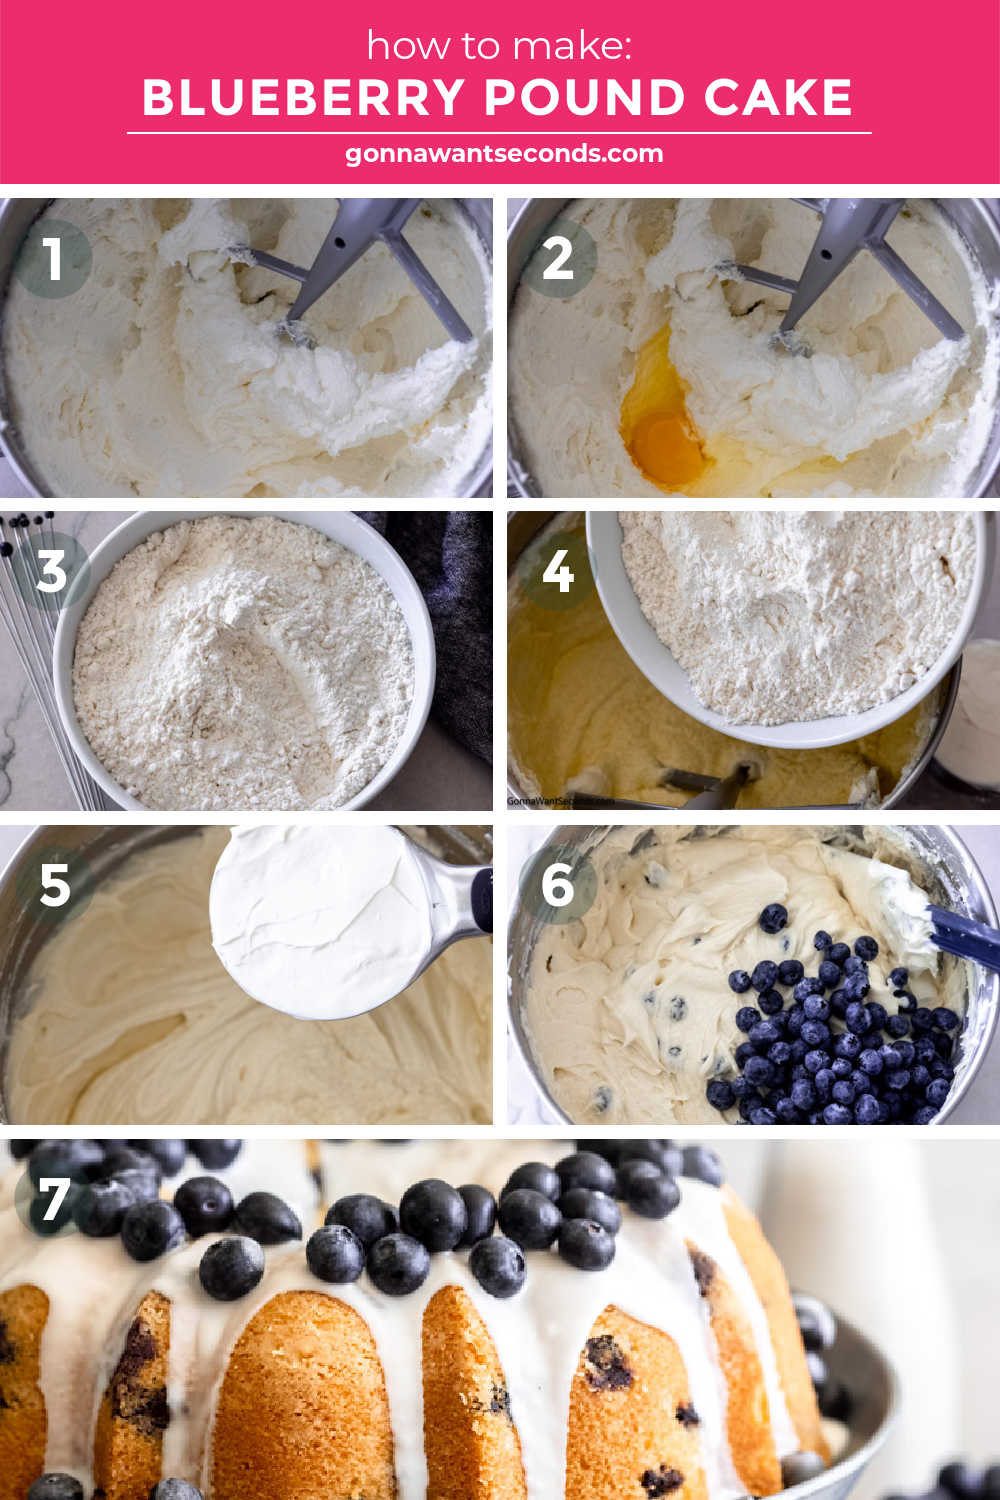 Step by step how to make blueberry pound cake